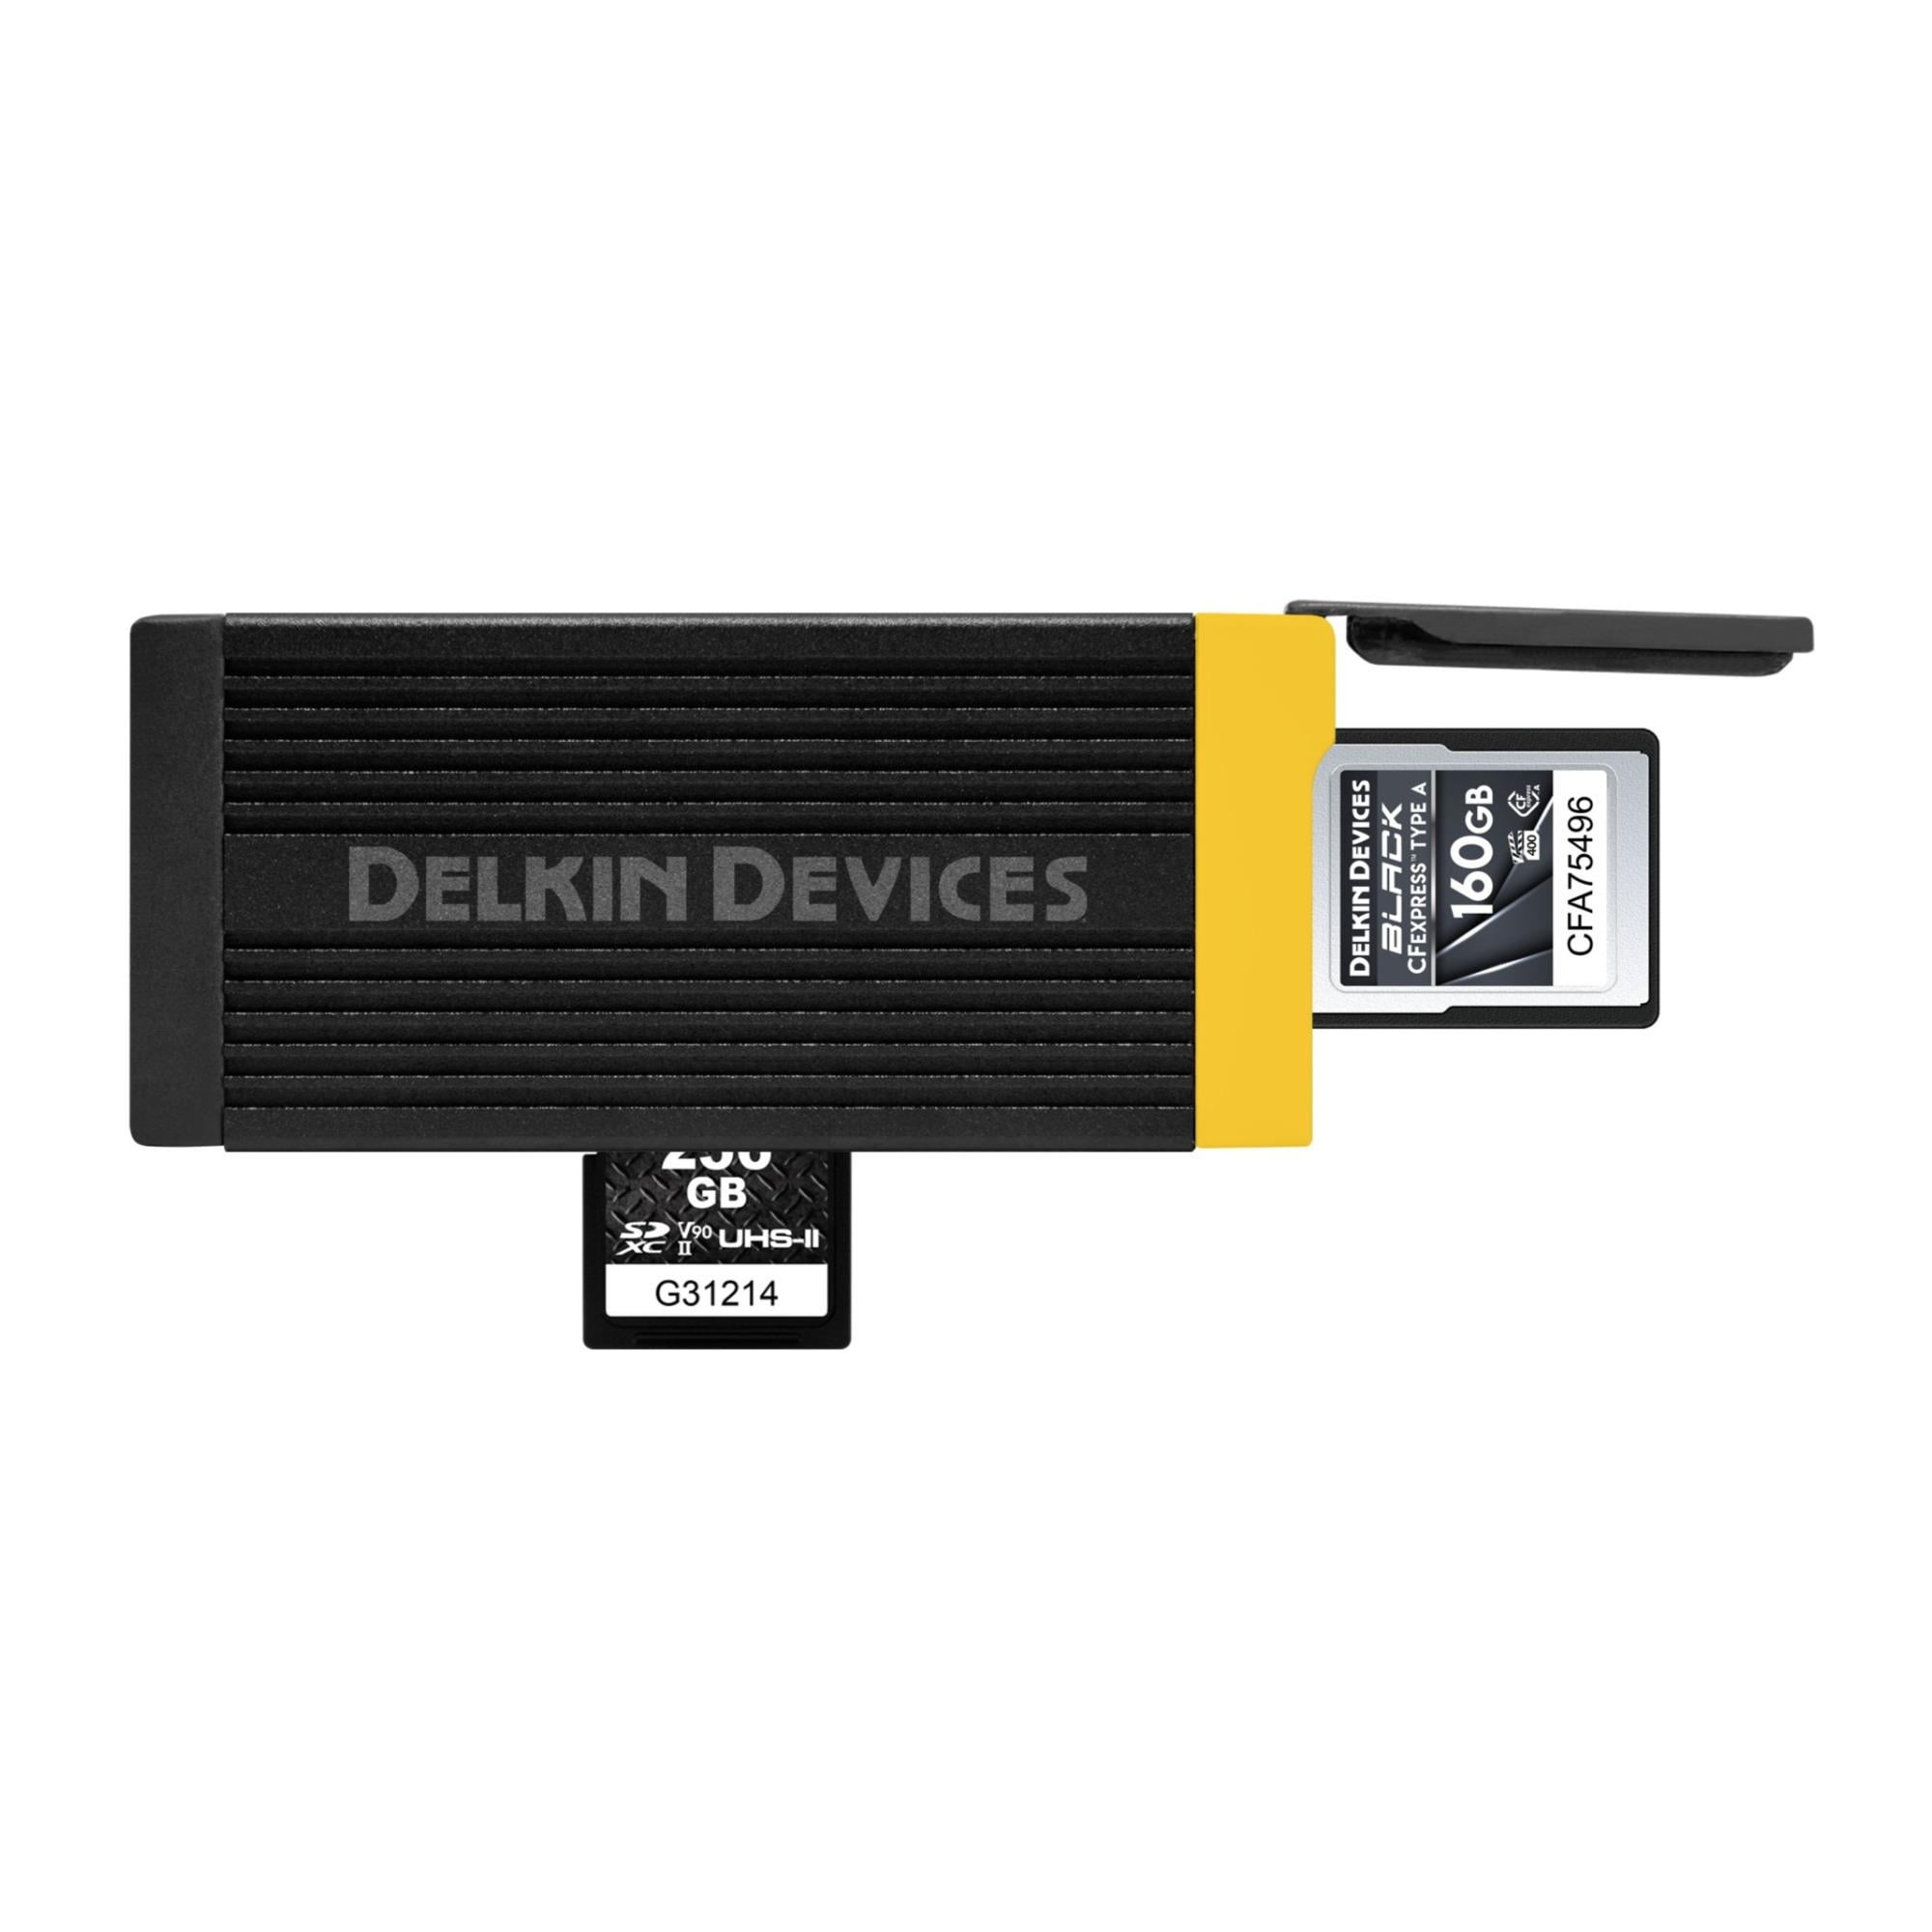 DupliSD Series SD/microSD Memory Card Duplicator Eraser